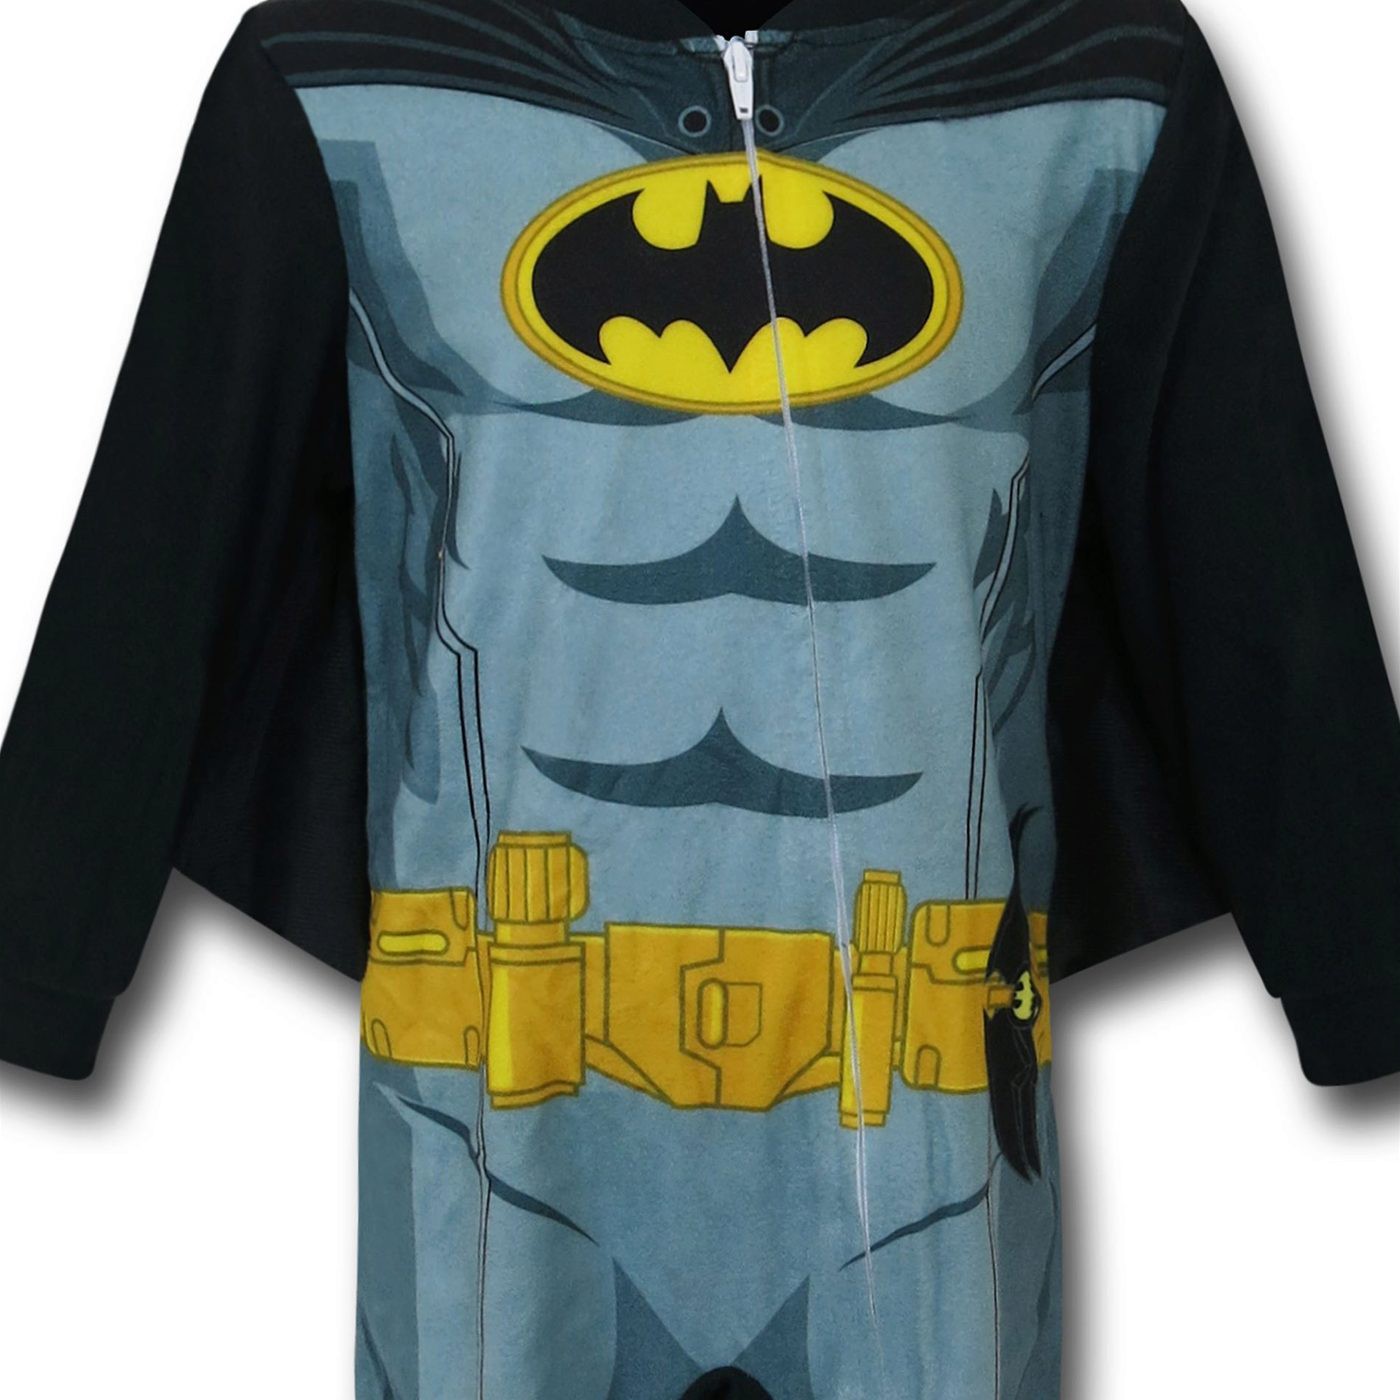 Batman Costume Kids Romper